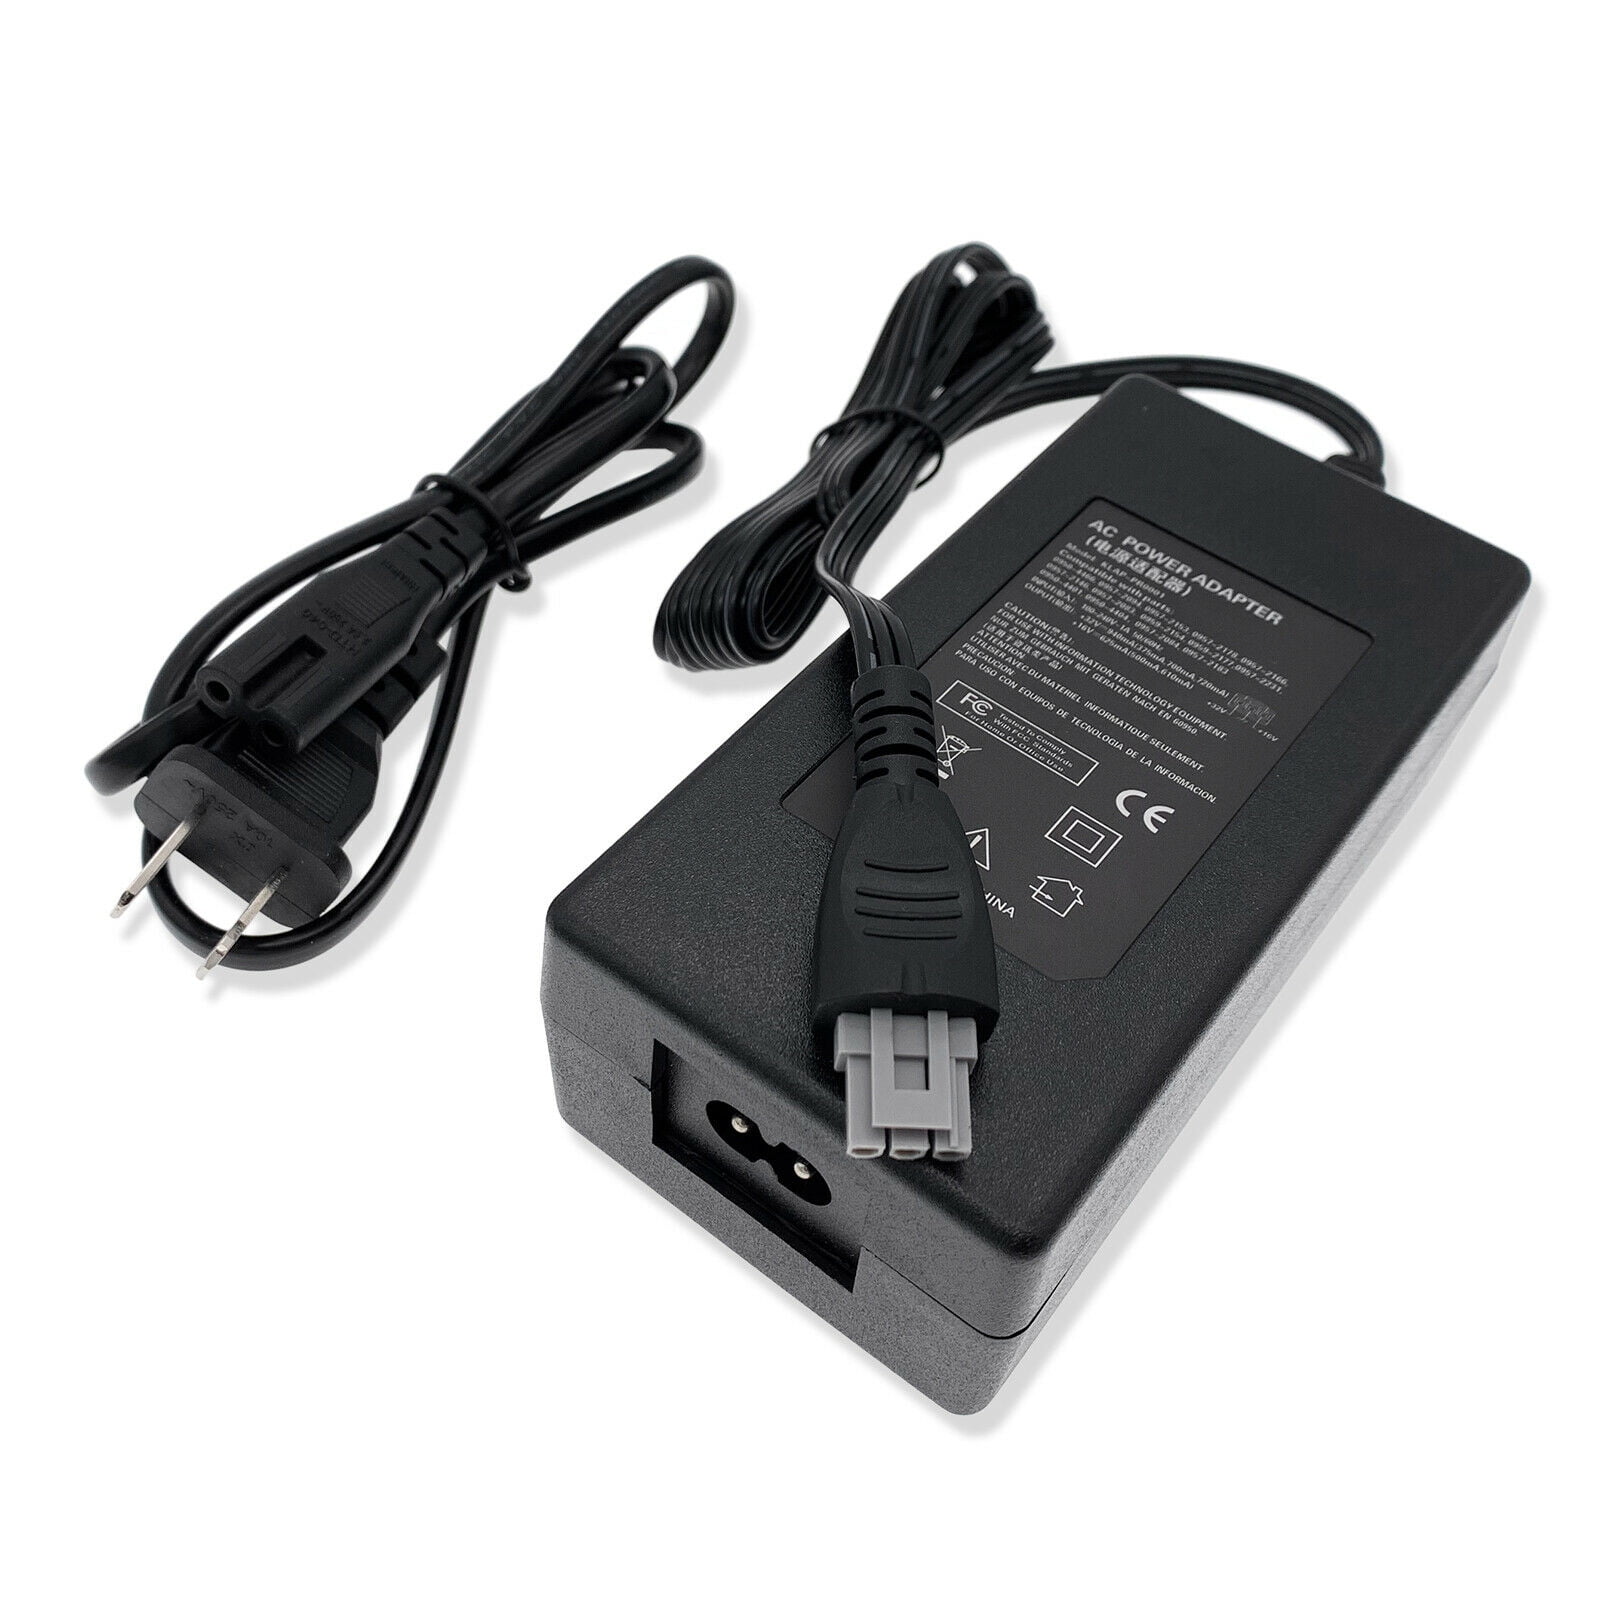 AC Adapter For HP Photosmart C3140 C3180 C4180 C5550 C5580 Printer Power Cord 